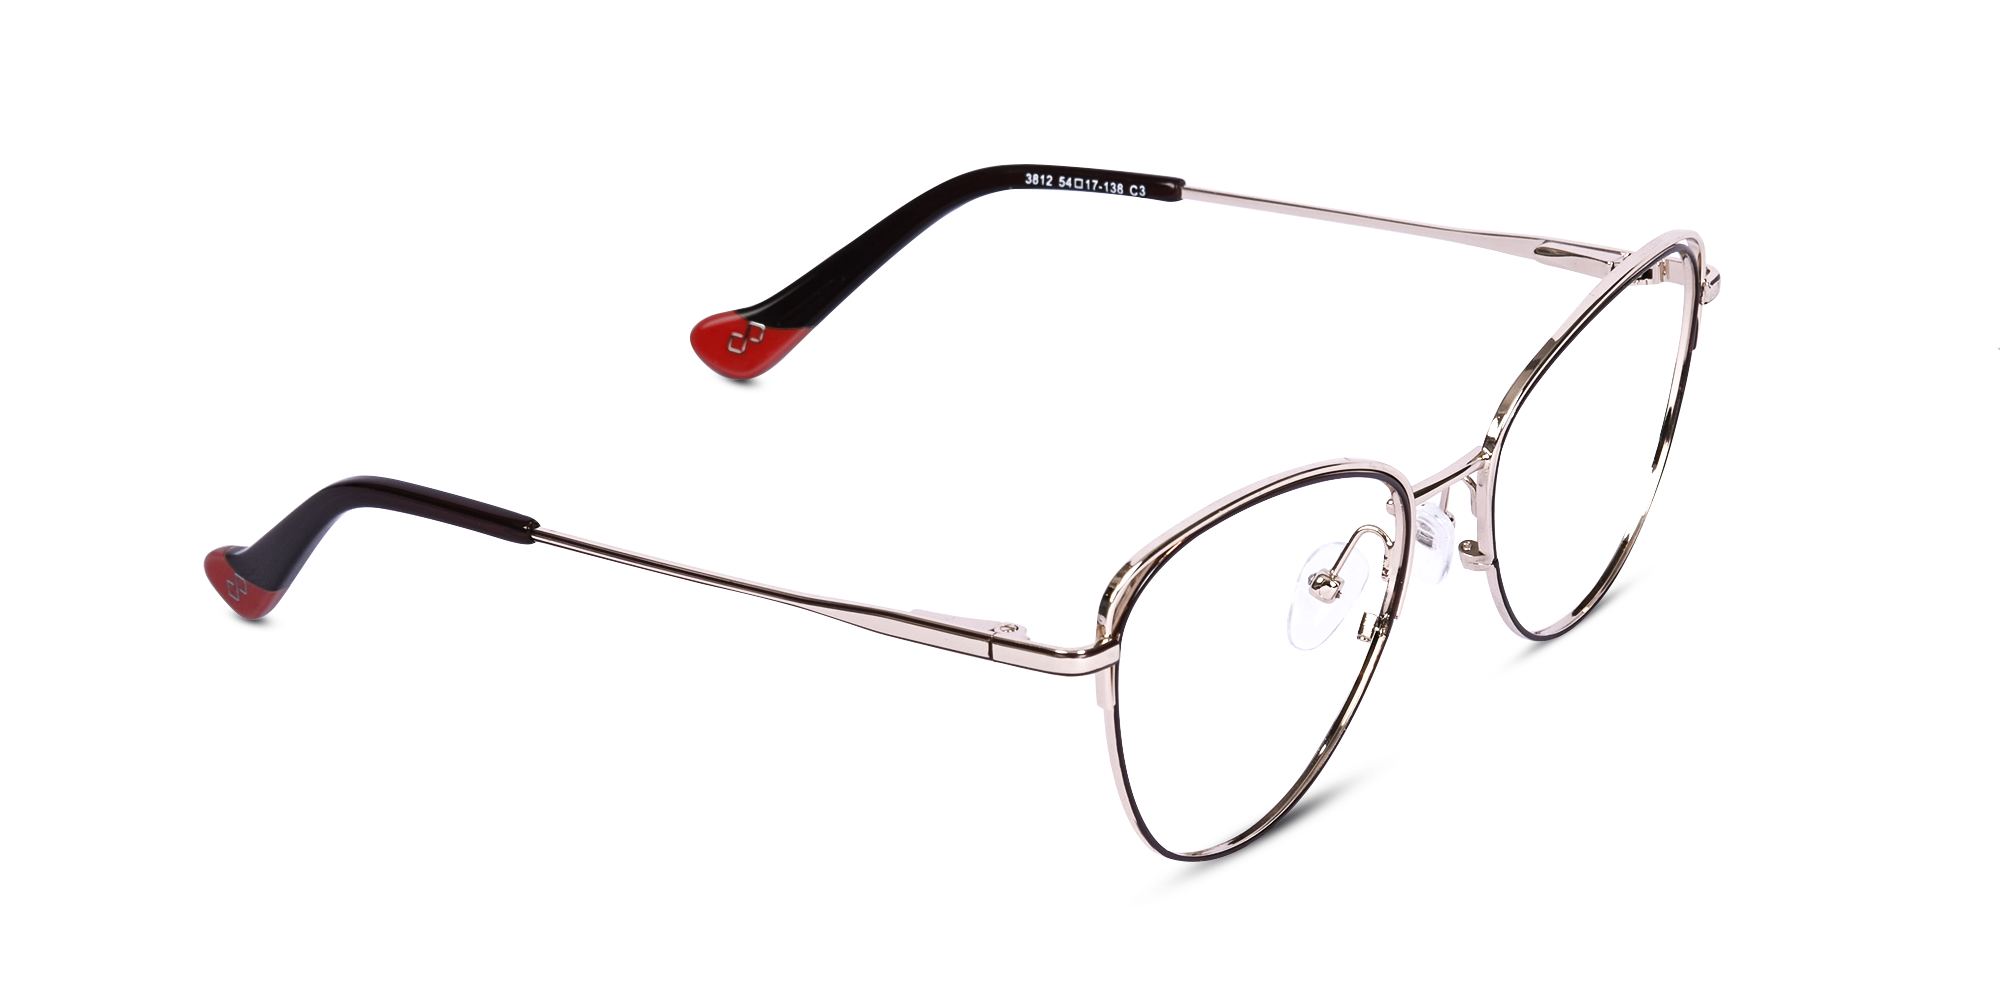 Women's Eyeglasses Metal Frames-1-1